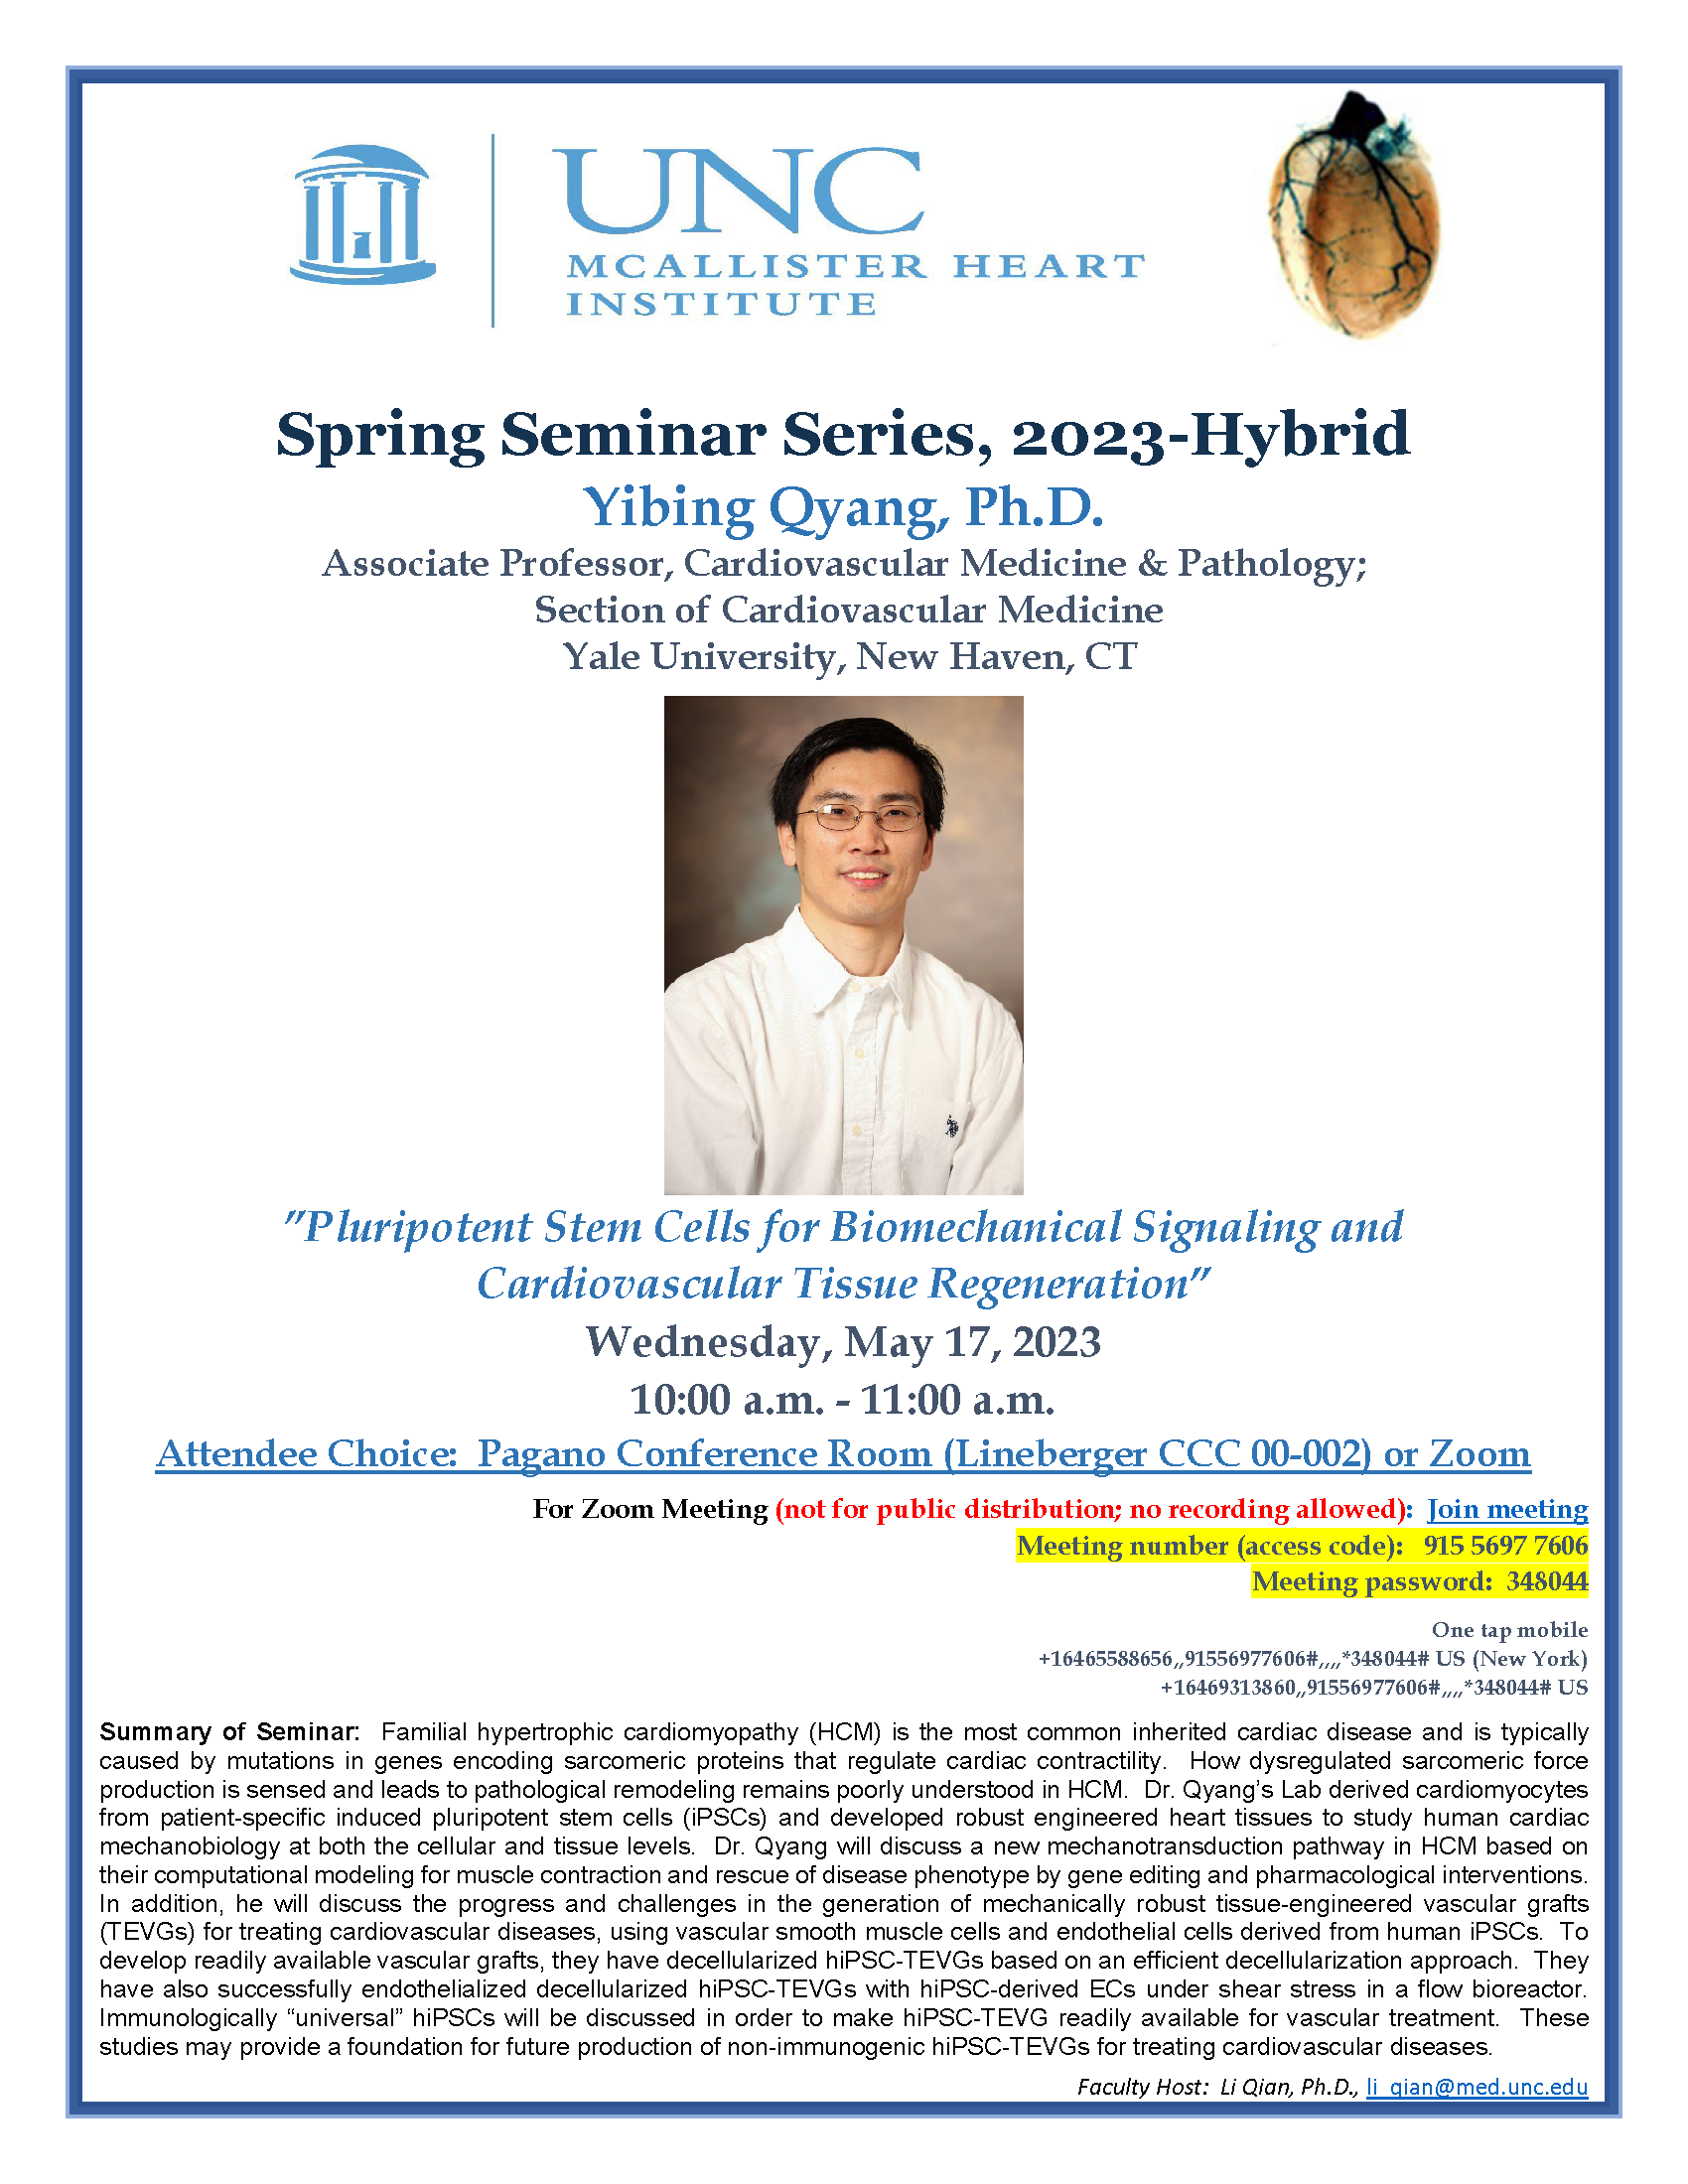 Yibing Qyang, Ph.D.